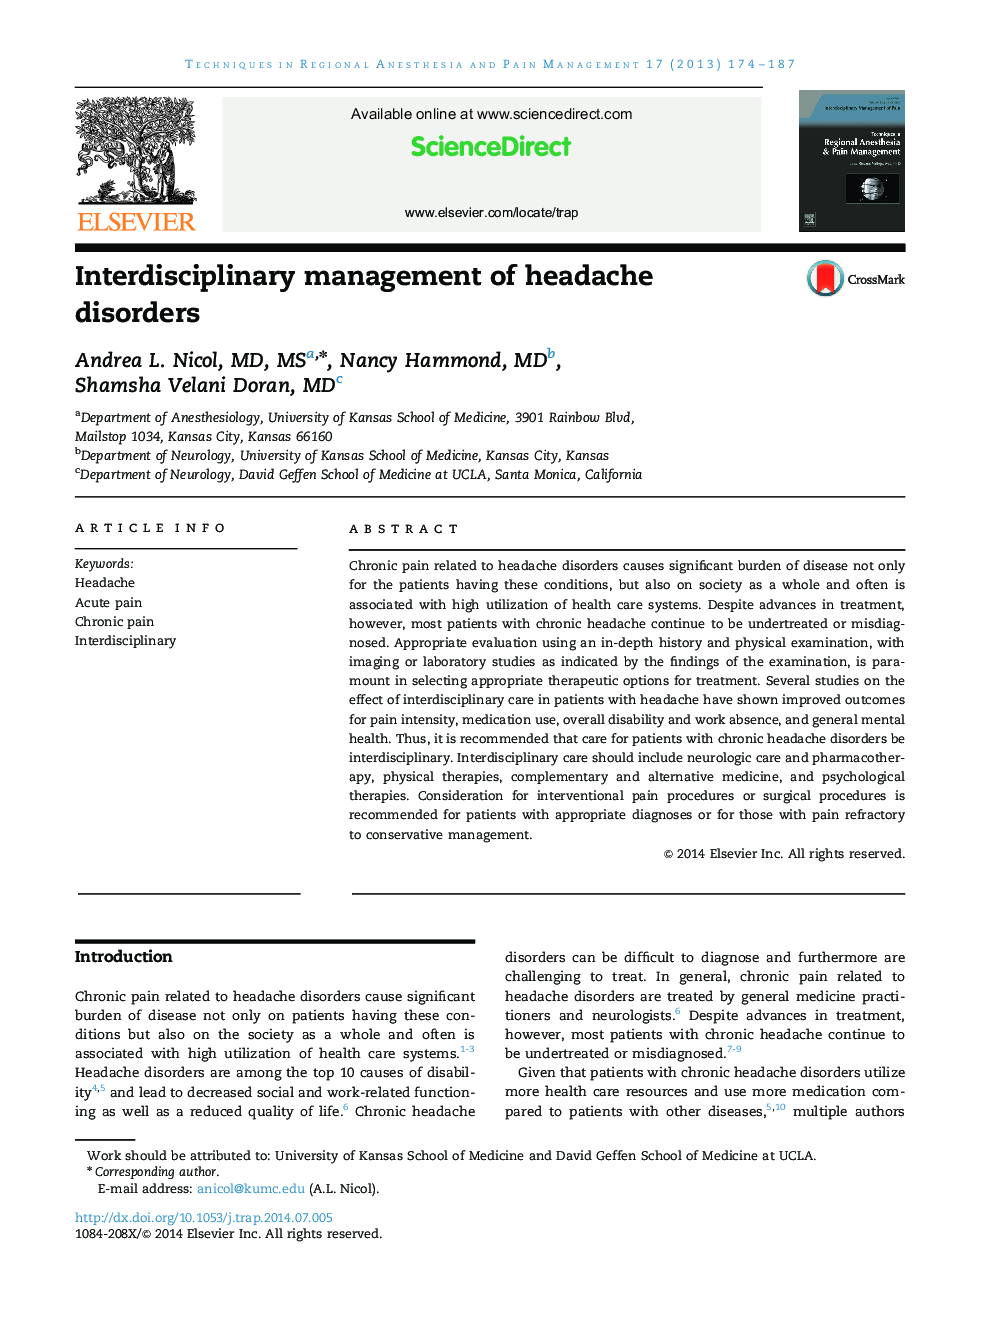 Interdisciplinary management of headache disorders 